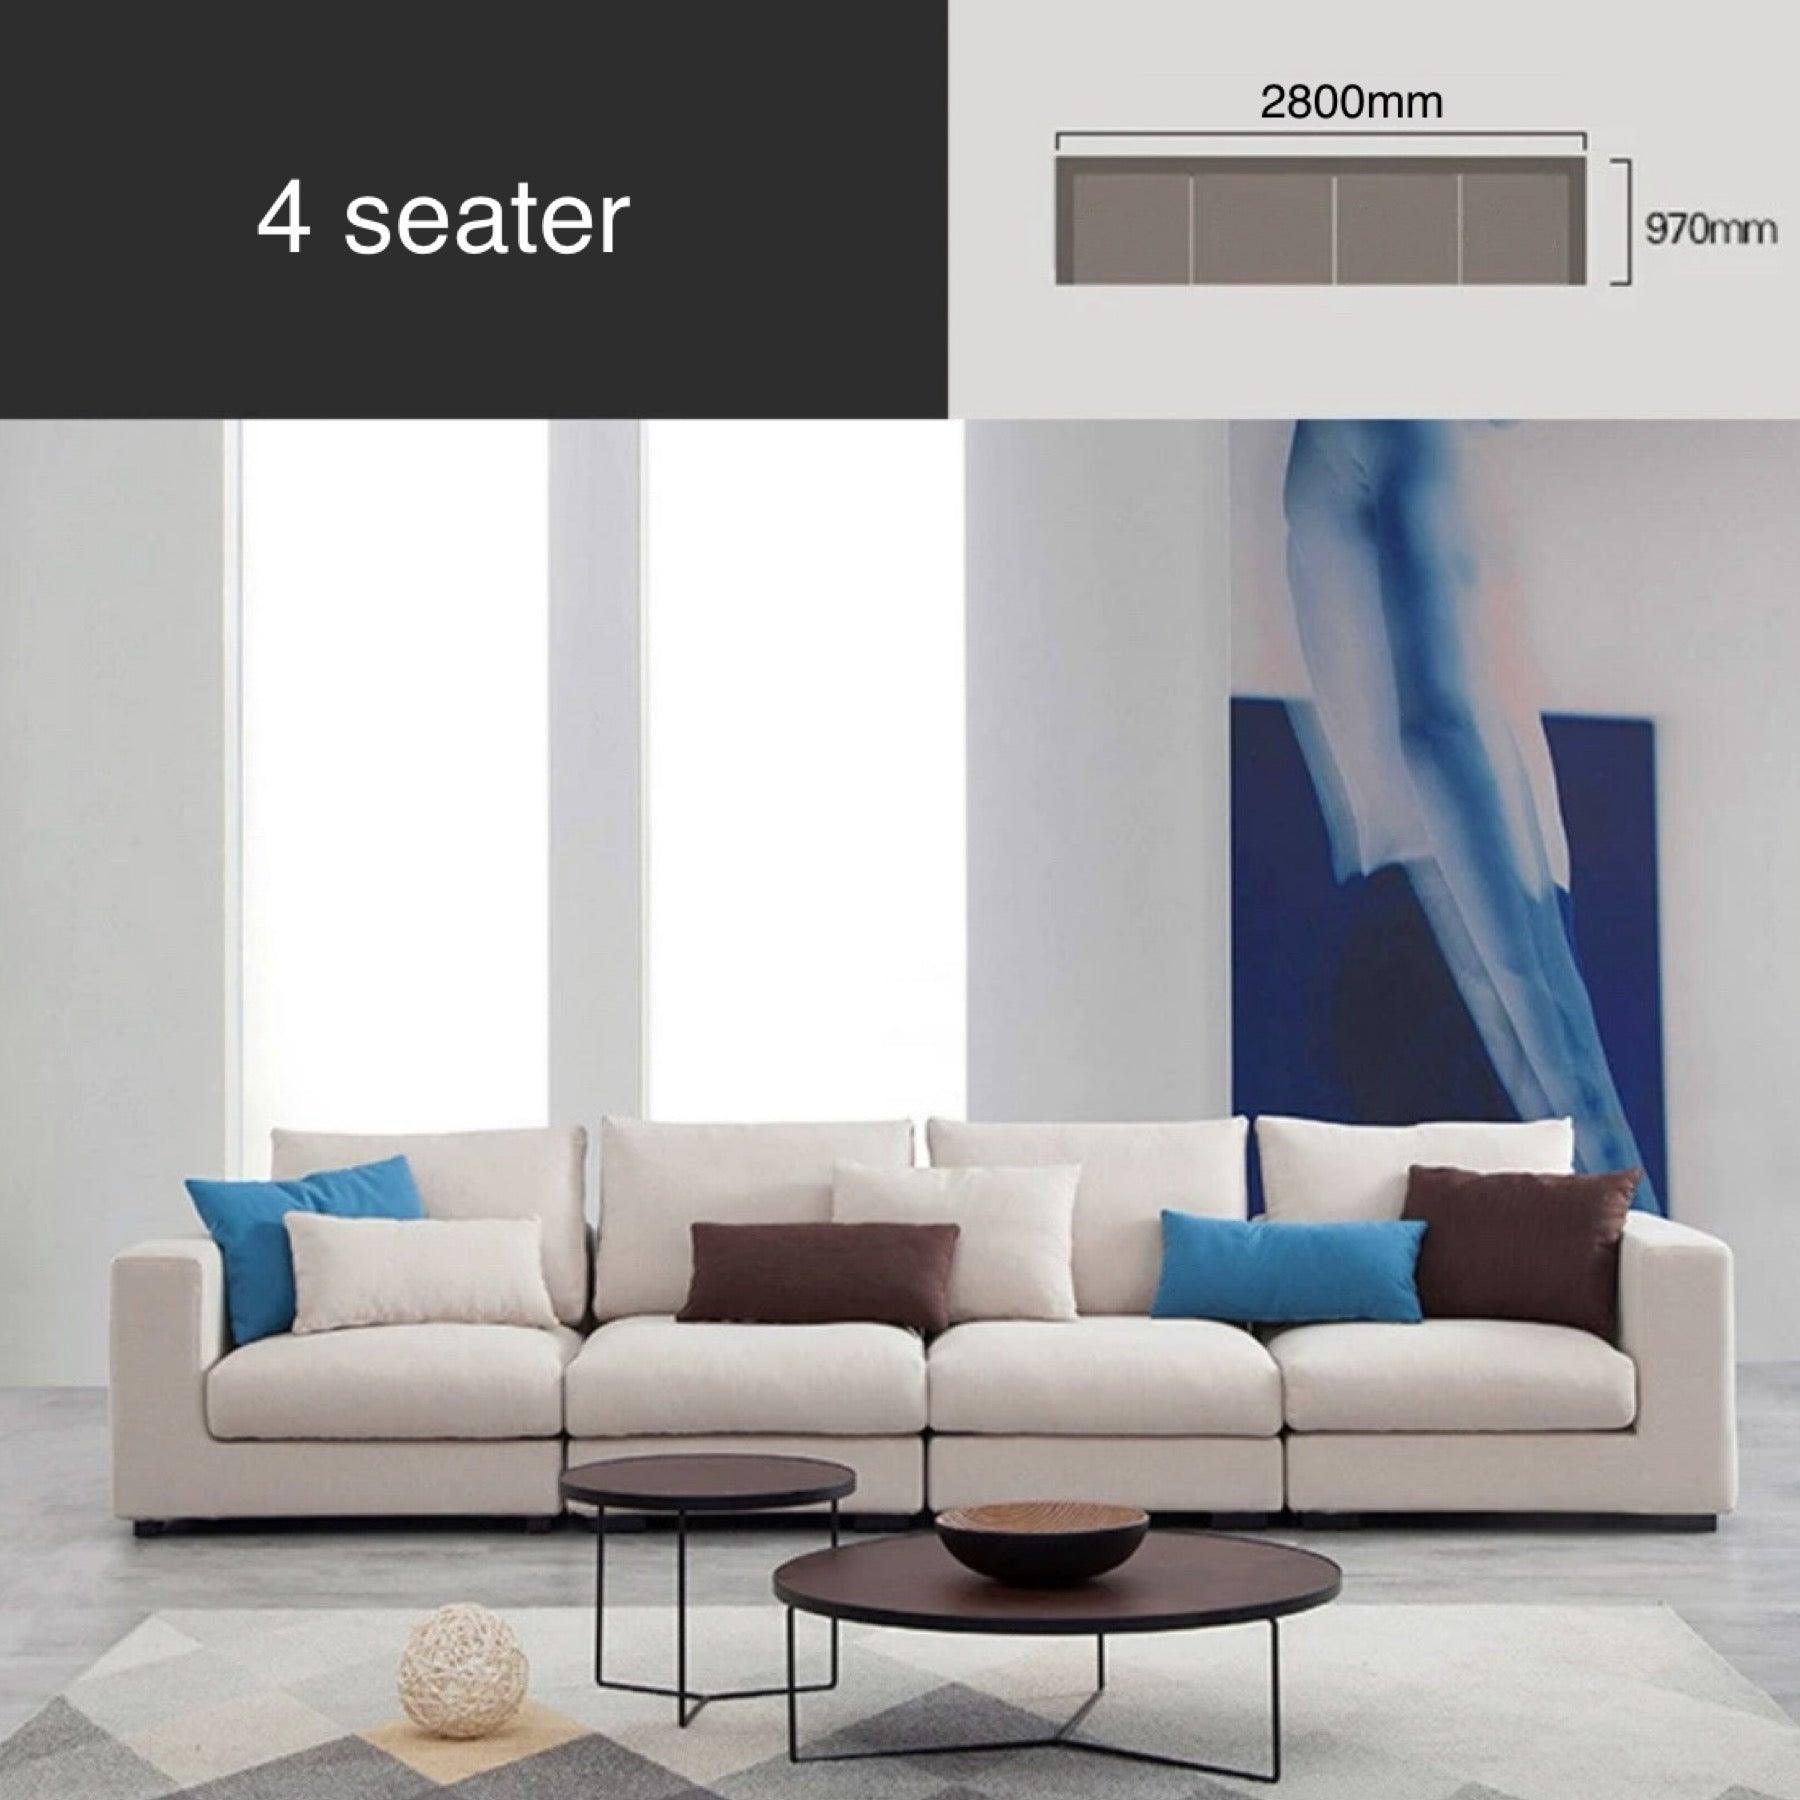 home-atelier-f31a Cotton Linen Fabric / 4 seater/ Length 280cm / Cream Bellini Sectional L-shape Corner Seat Sofa